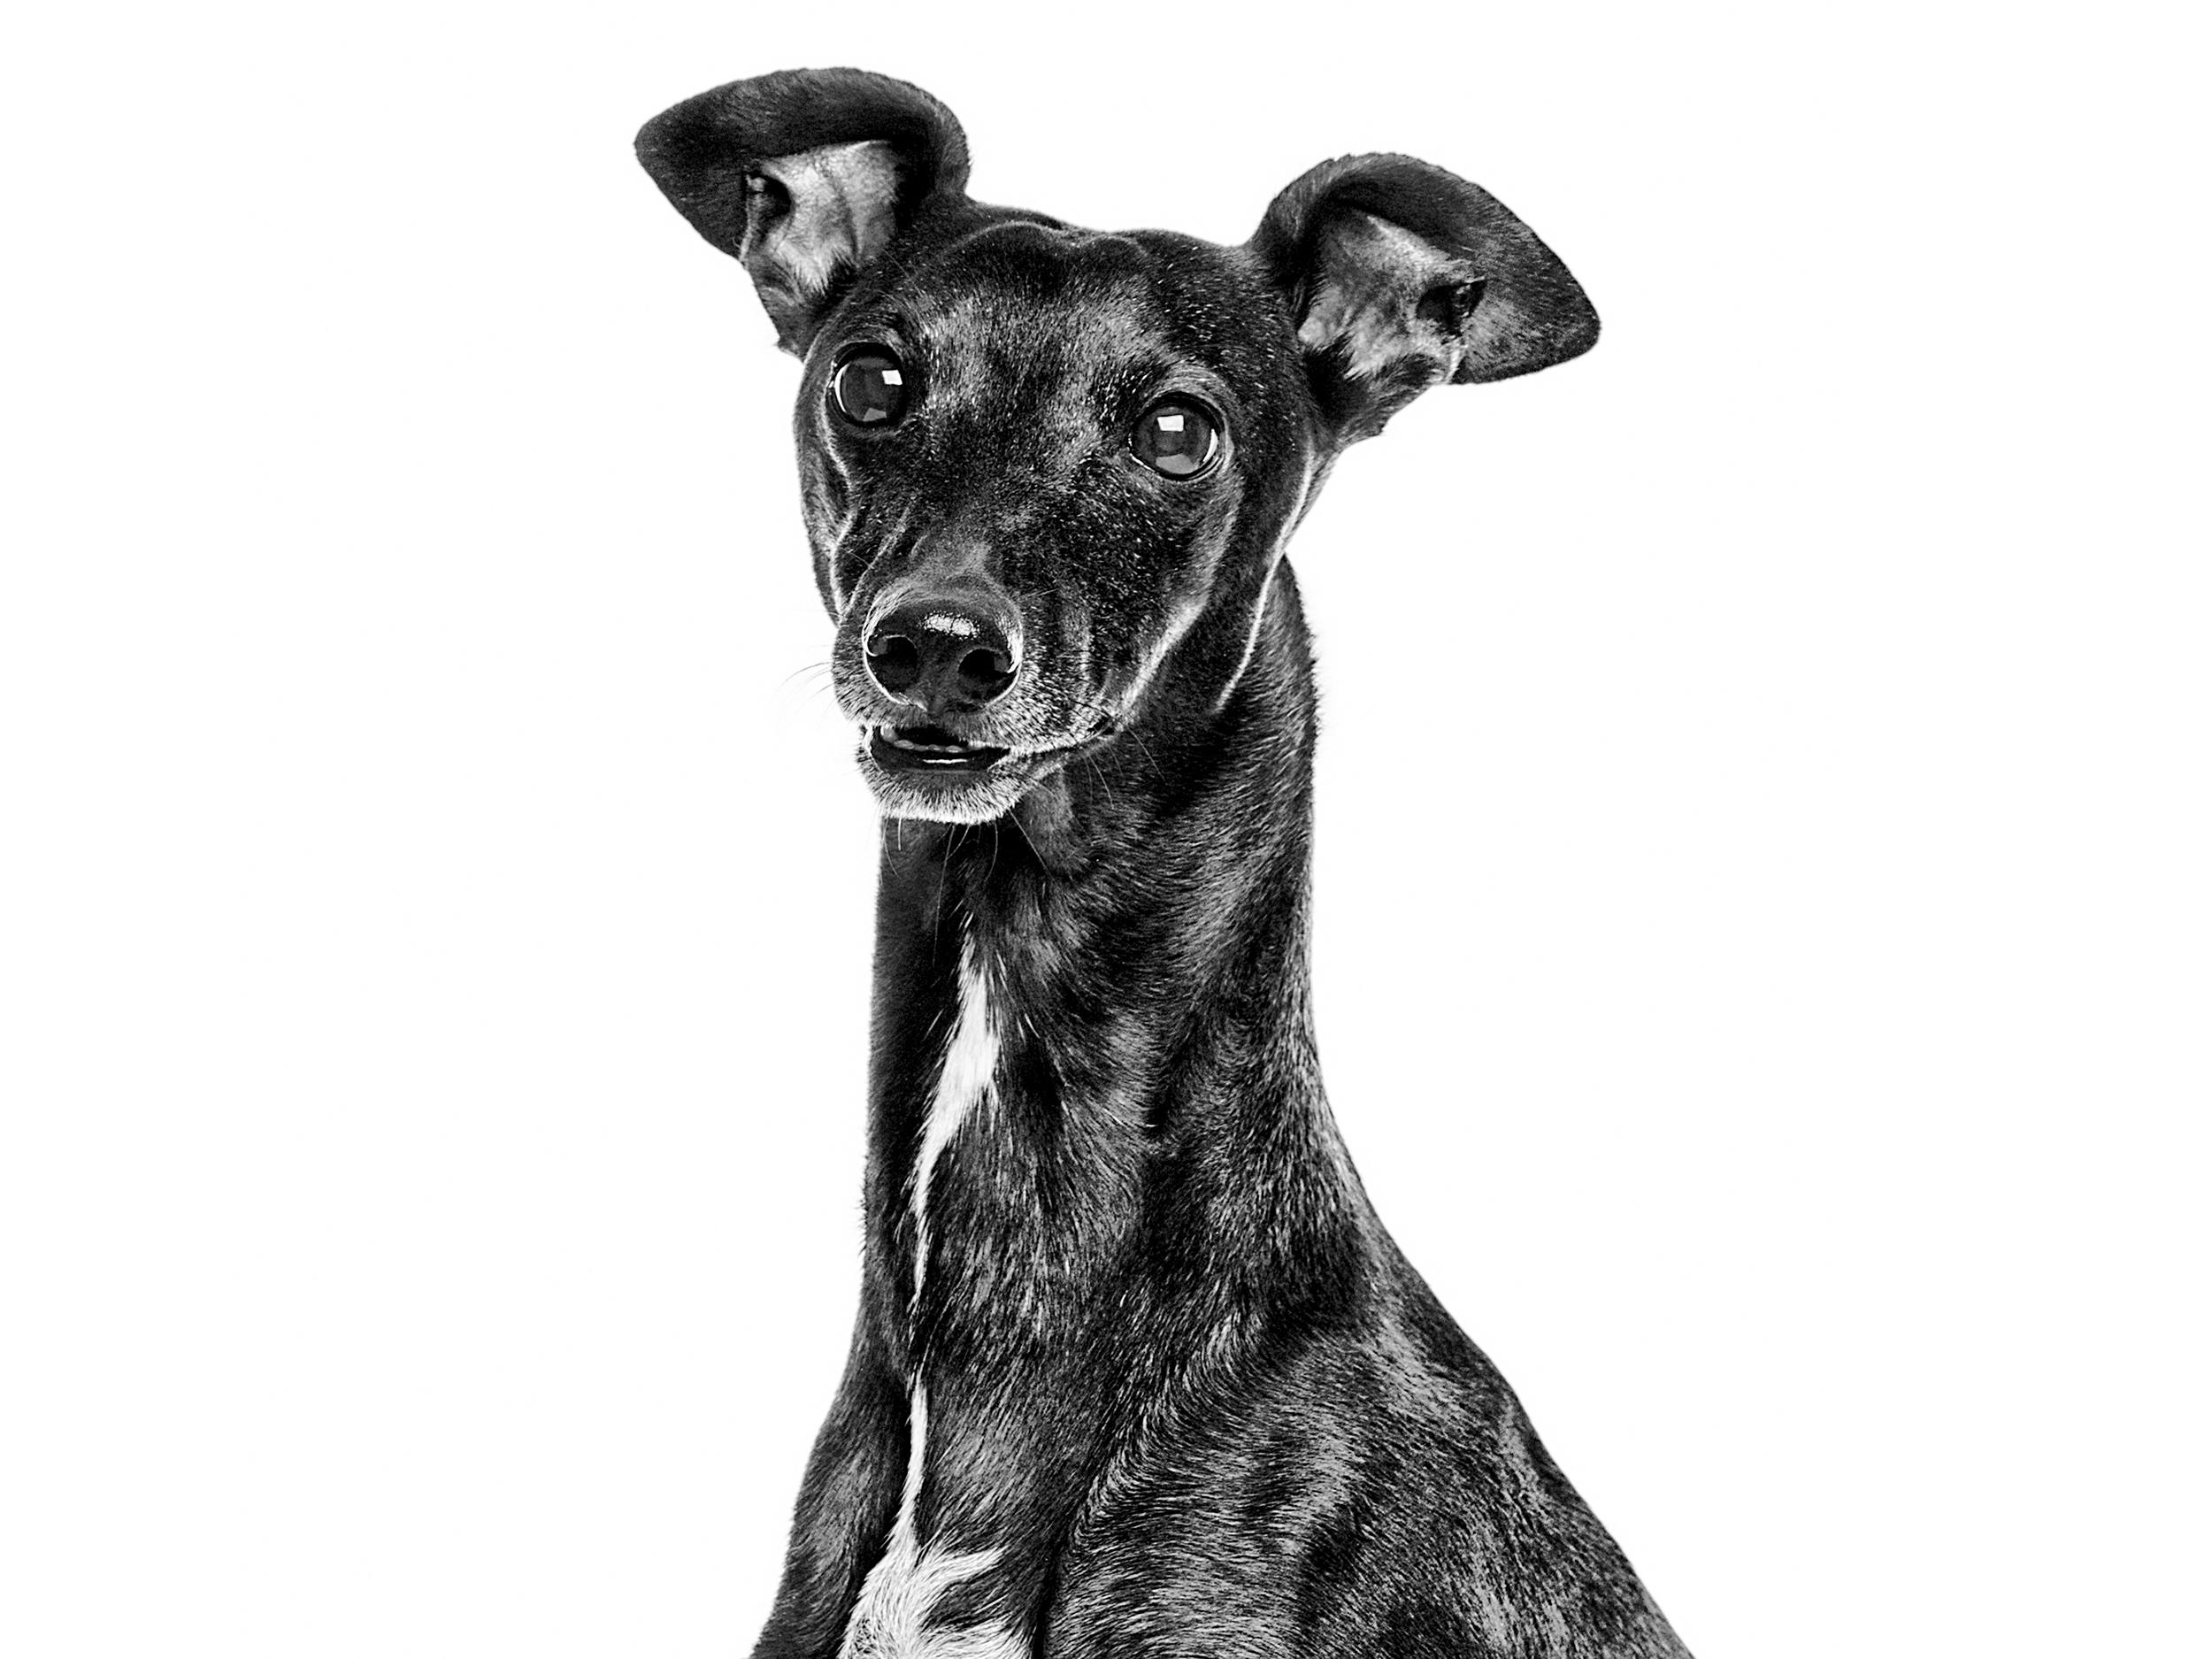 miniature italian greyhound black and white